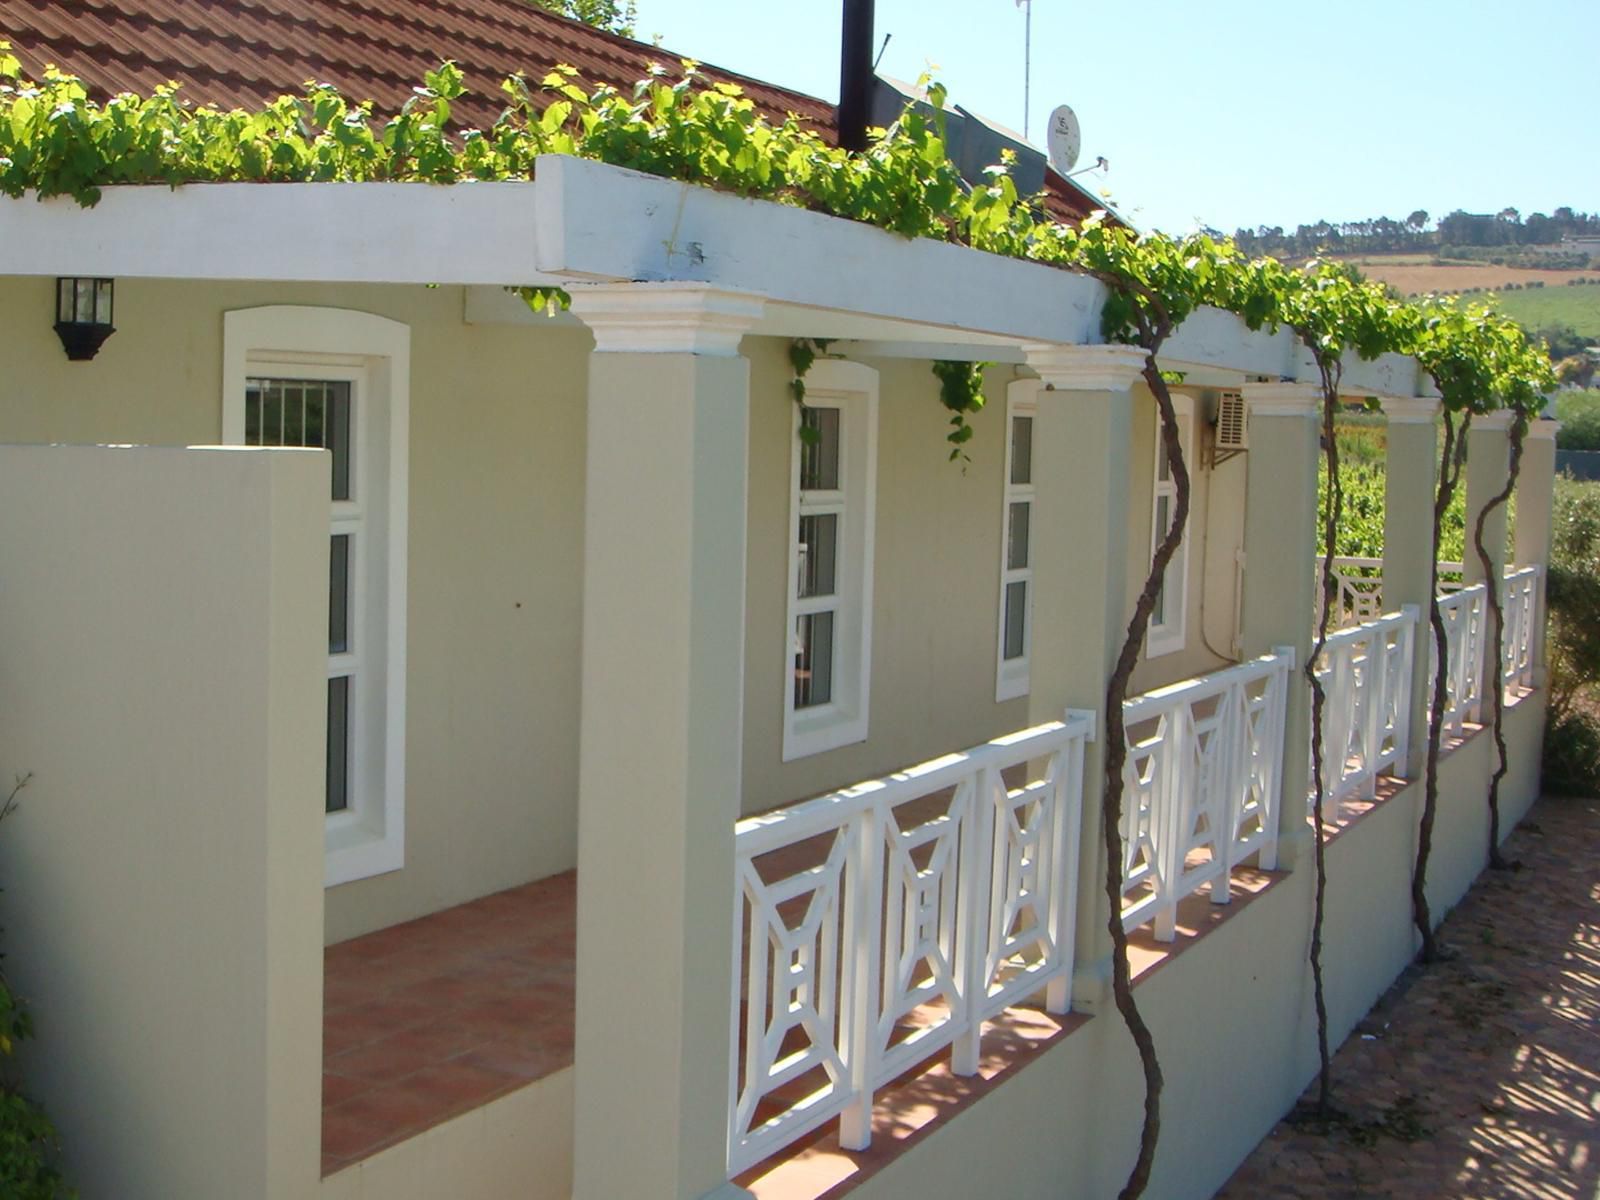 Clos Malverne Wine Estate Accommodation Devonvallei Stellenbosch Western Cape South Africa Balcony, Architecture, House, Building